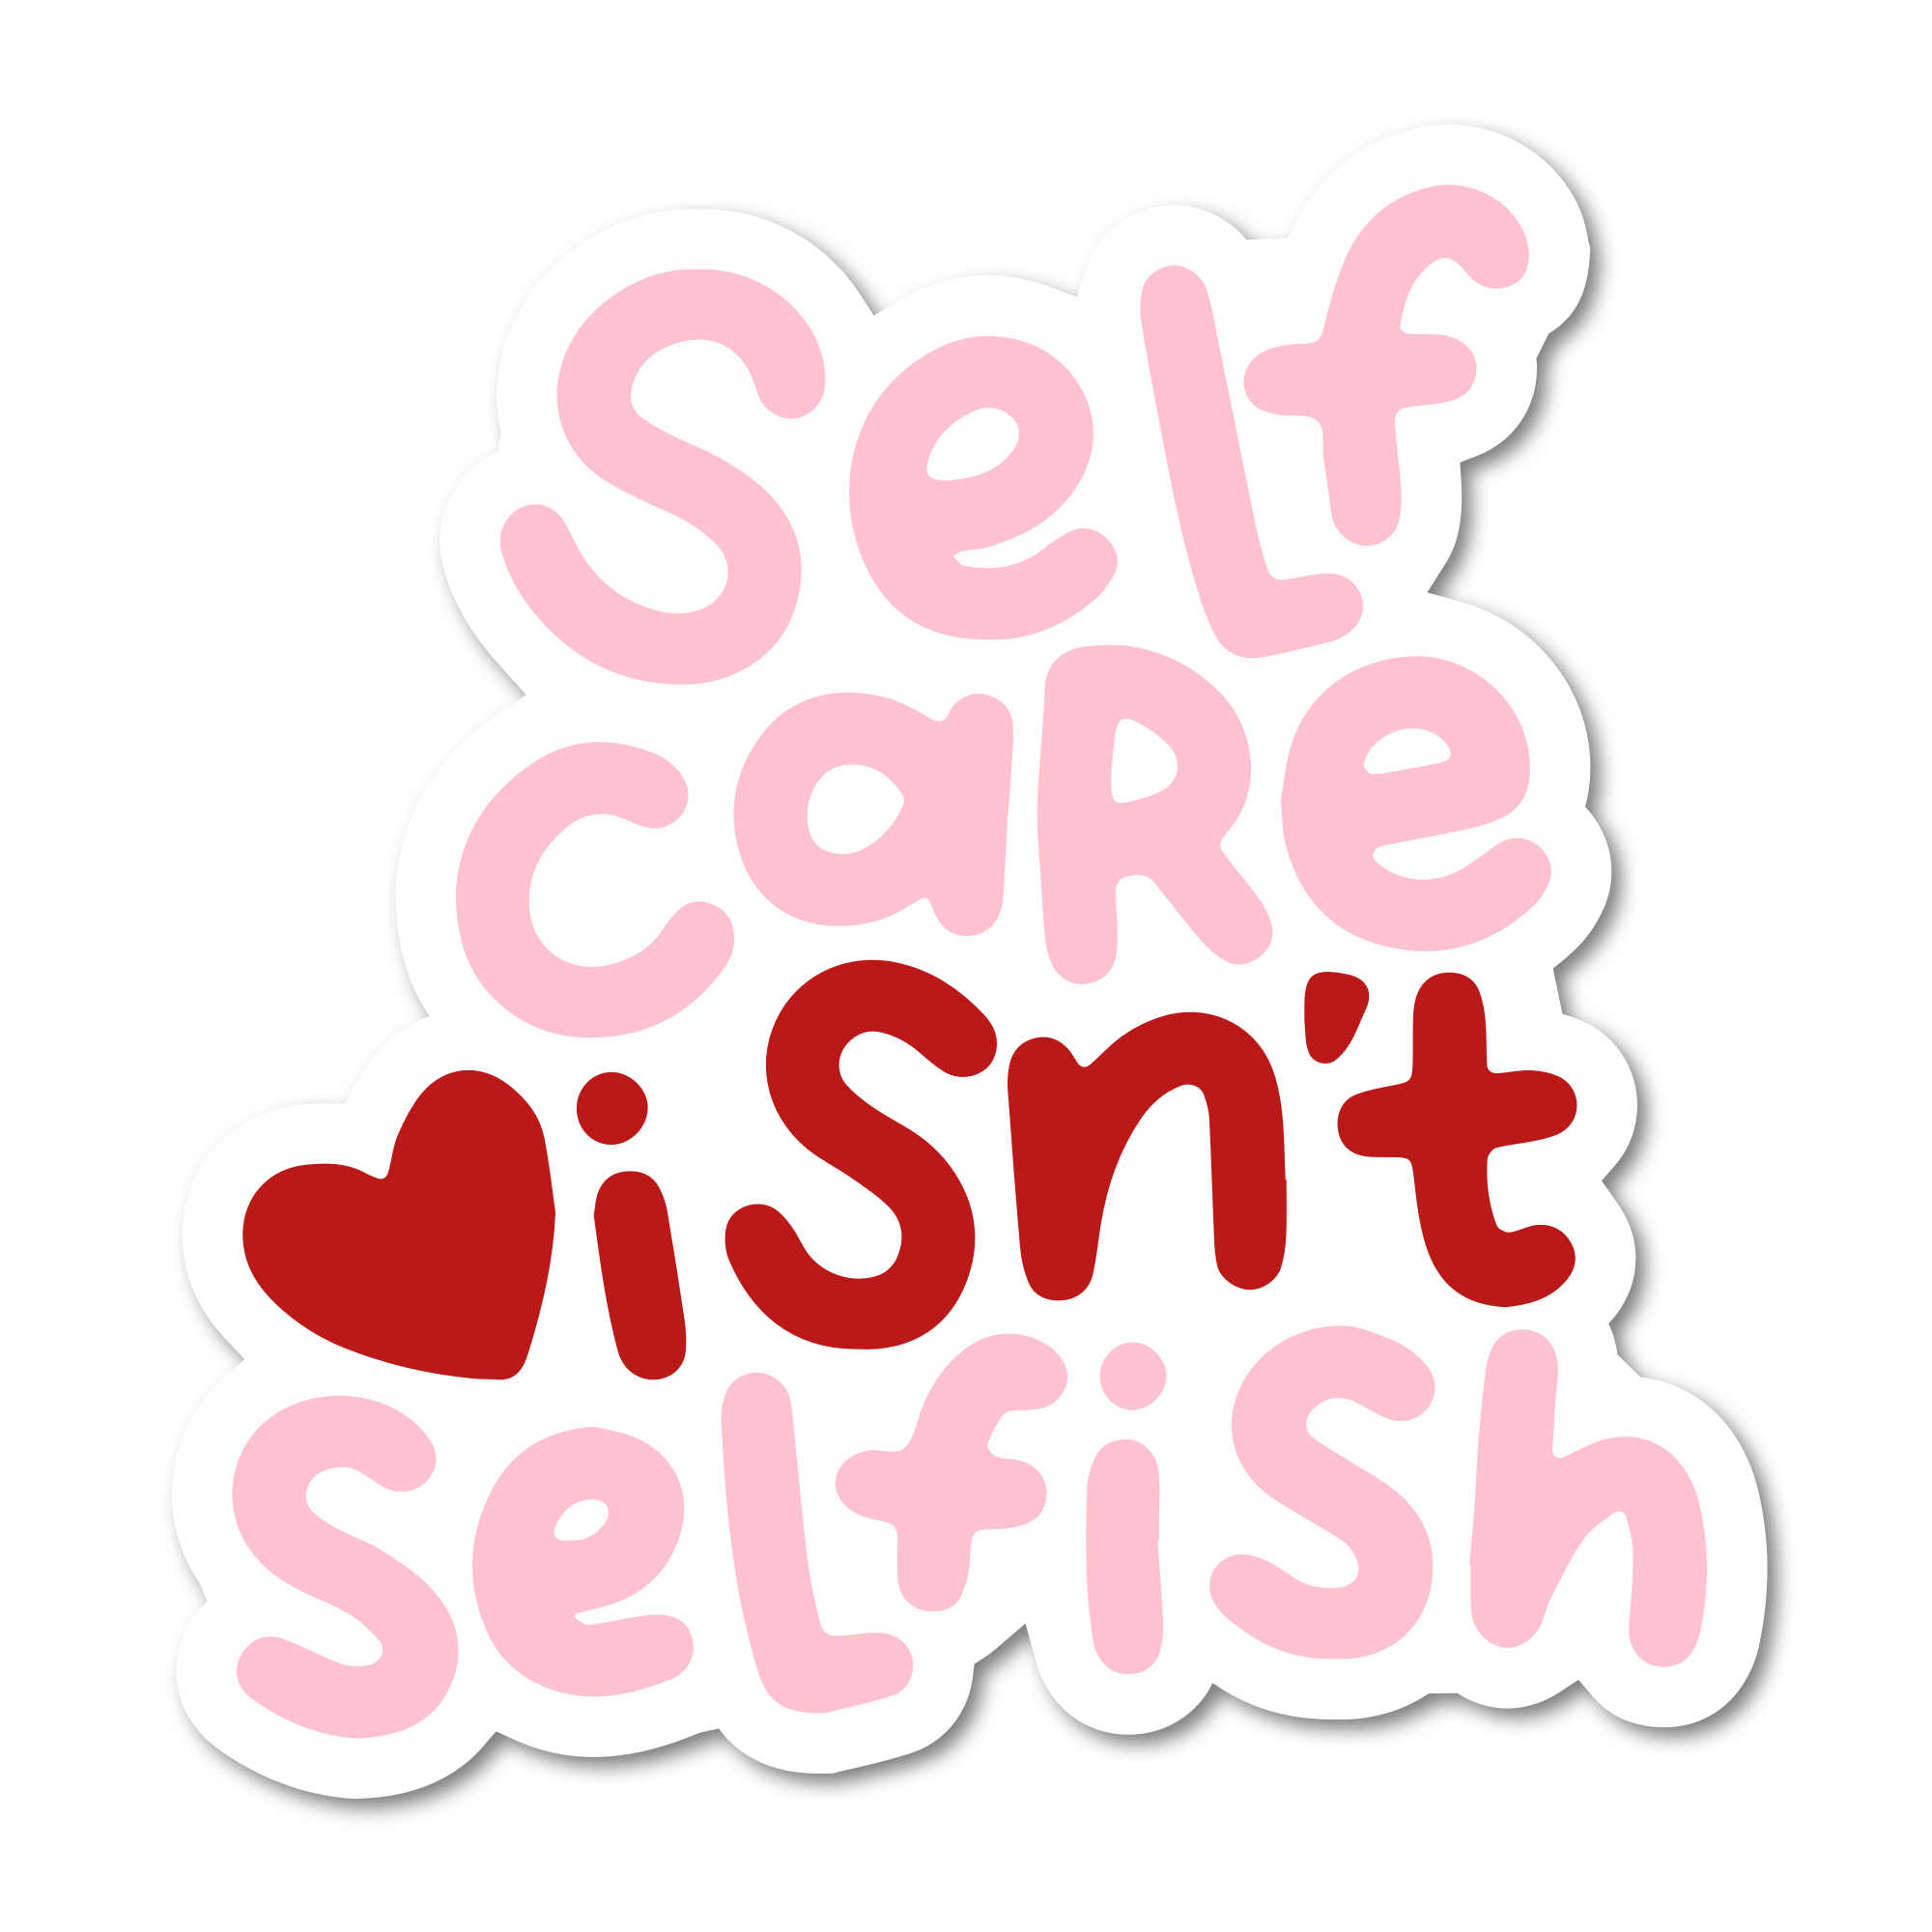 Self Care Isn't Selfish Sticker - Spiral Circle